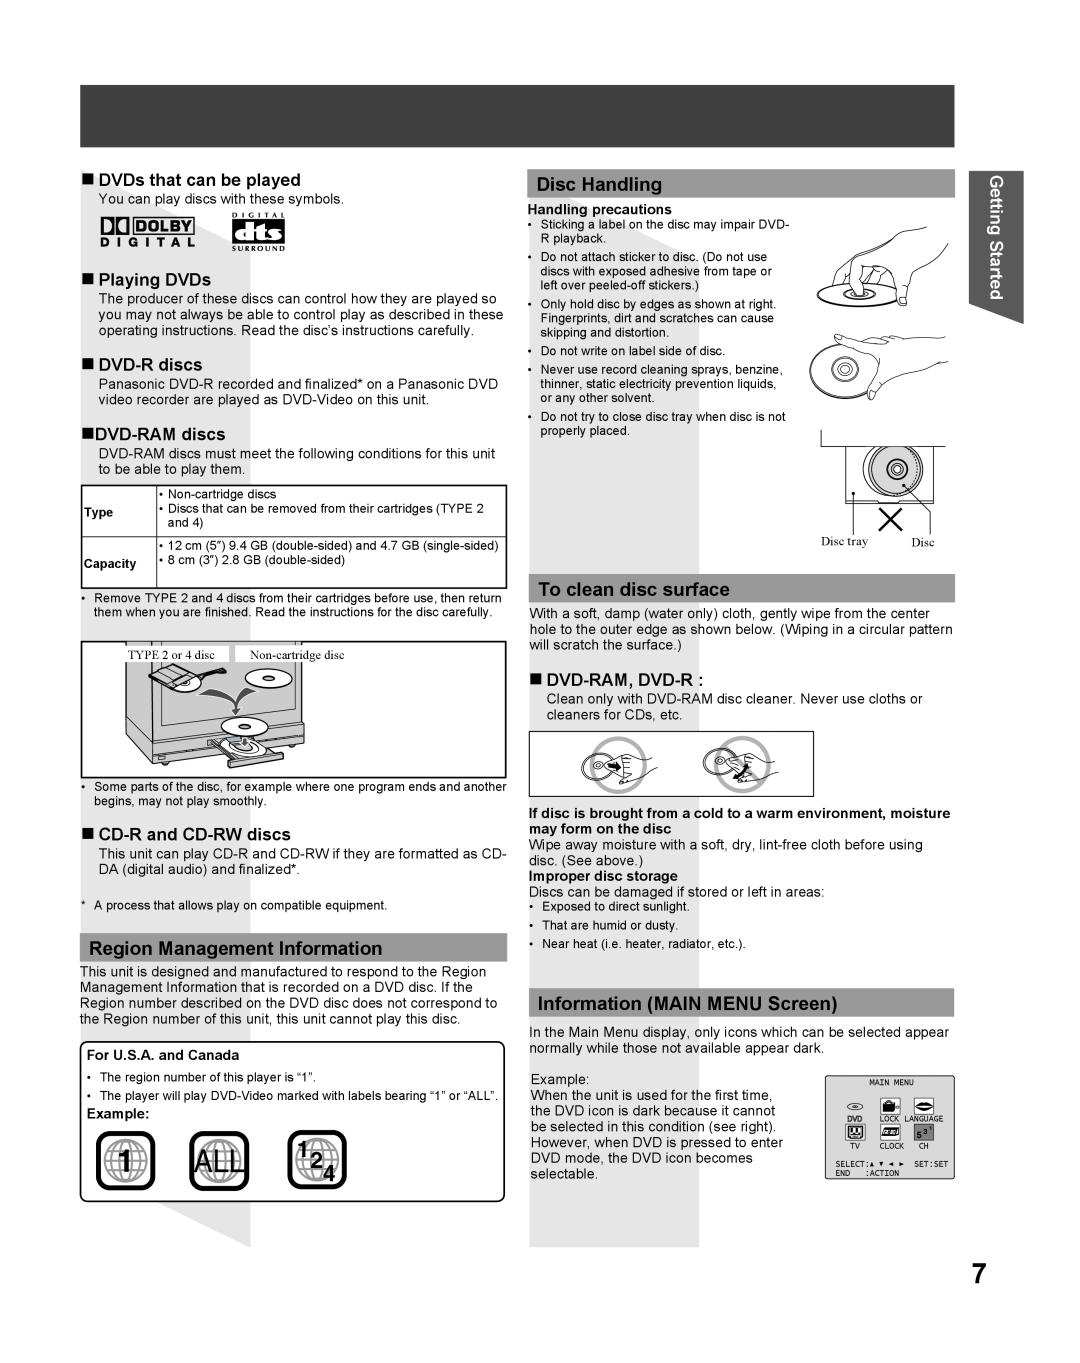 Panasonic PV-27DF5 manual Region Management Information, Disc Handling, To clean disc surface, Information MAIN MENU Screen 